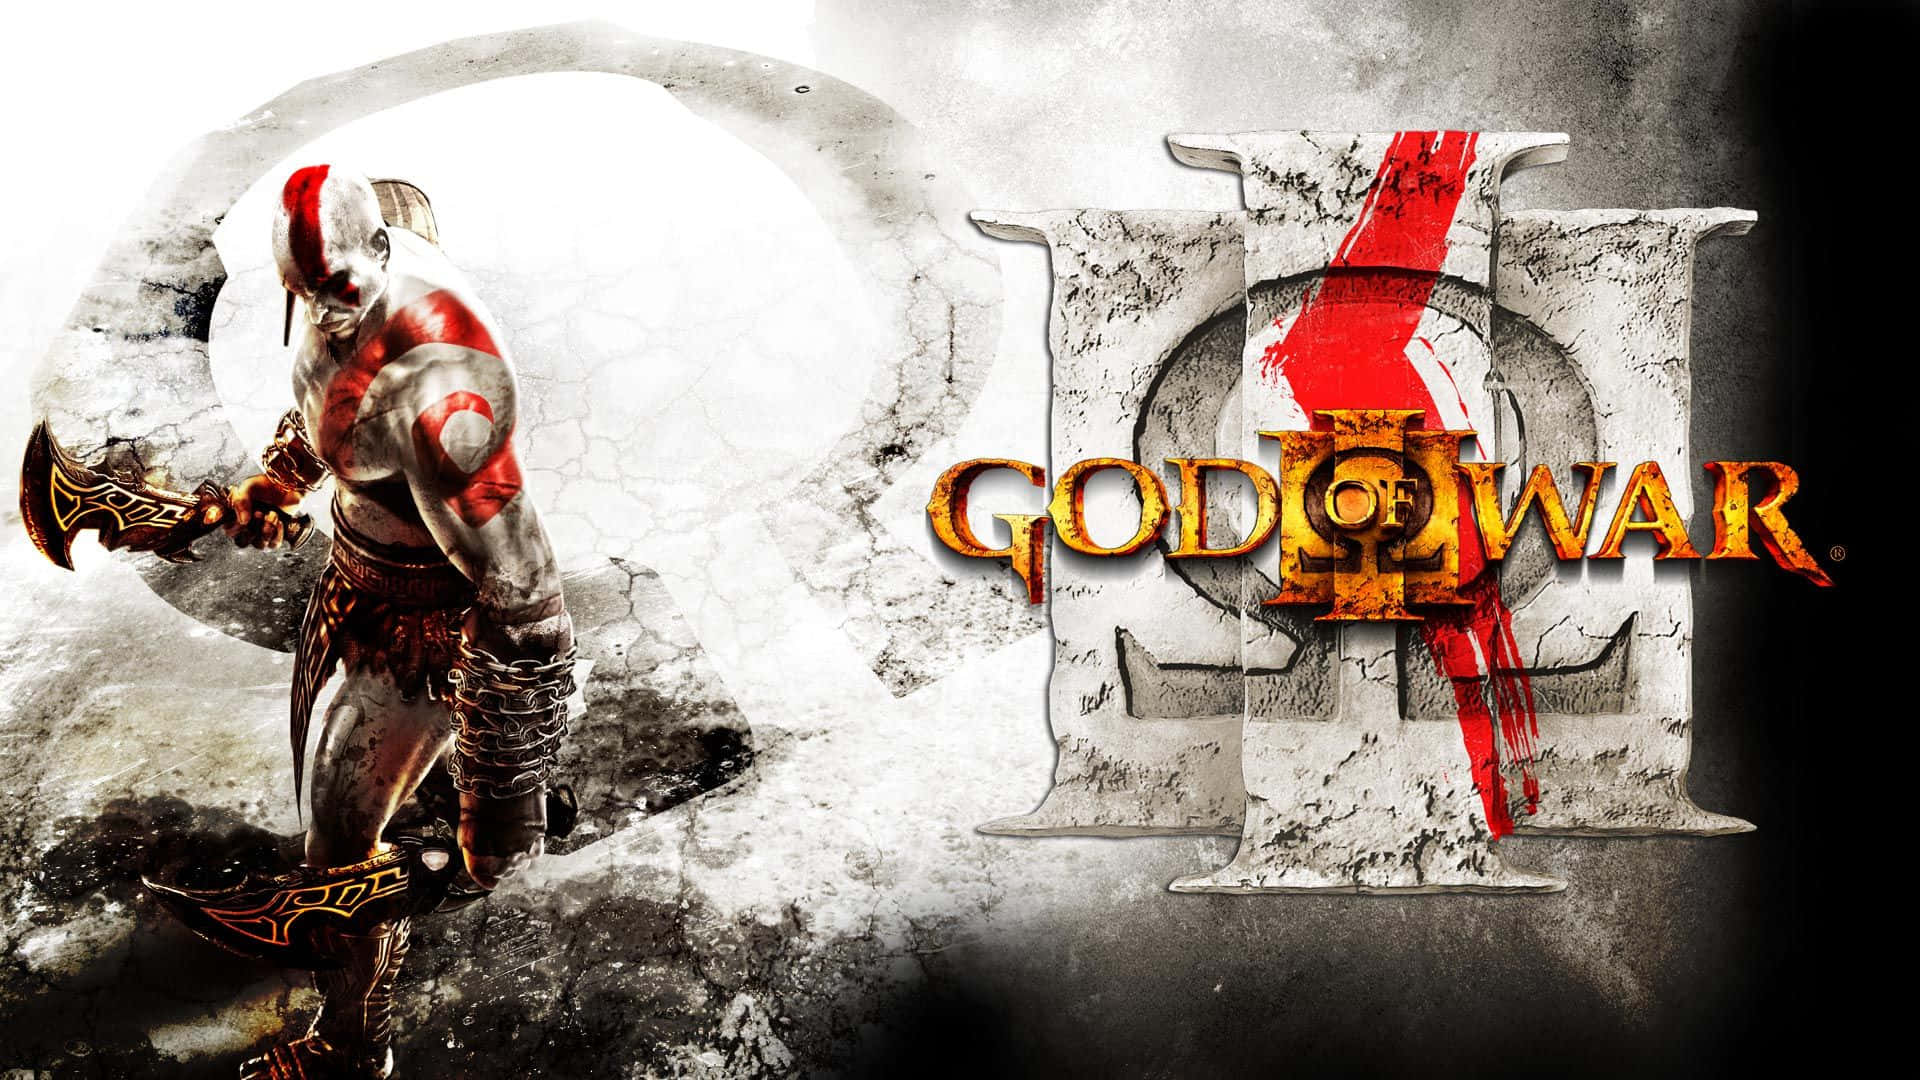 Kratos battling the Titans in "God of War III" Wallpaper